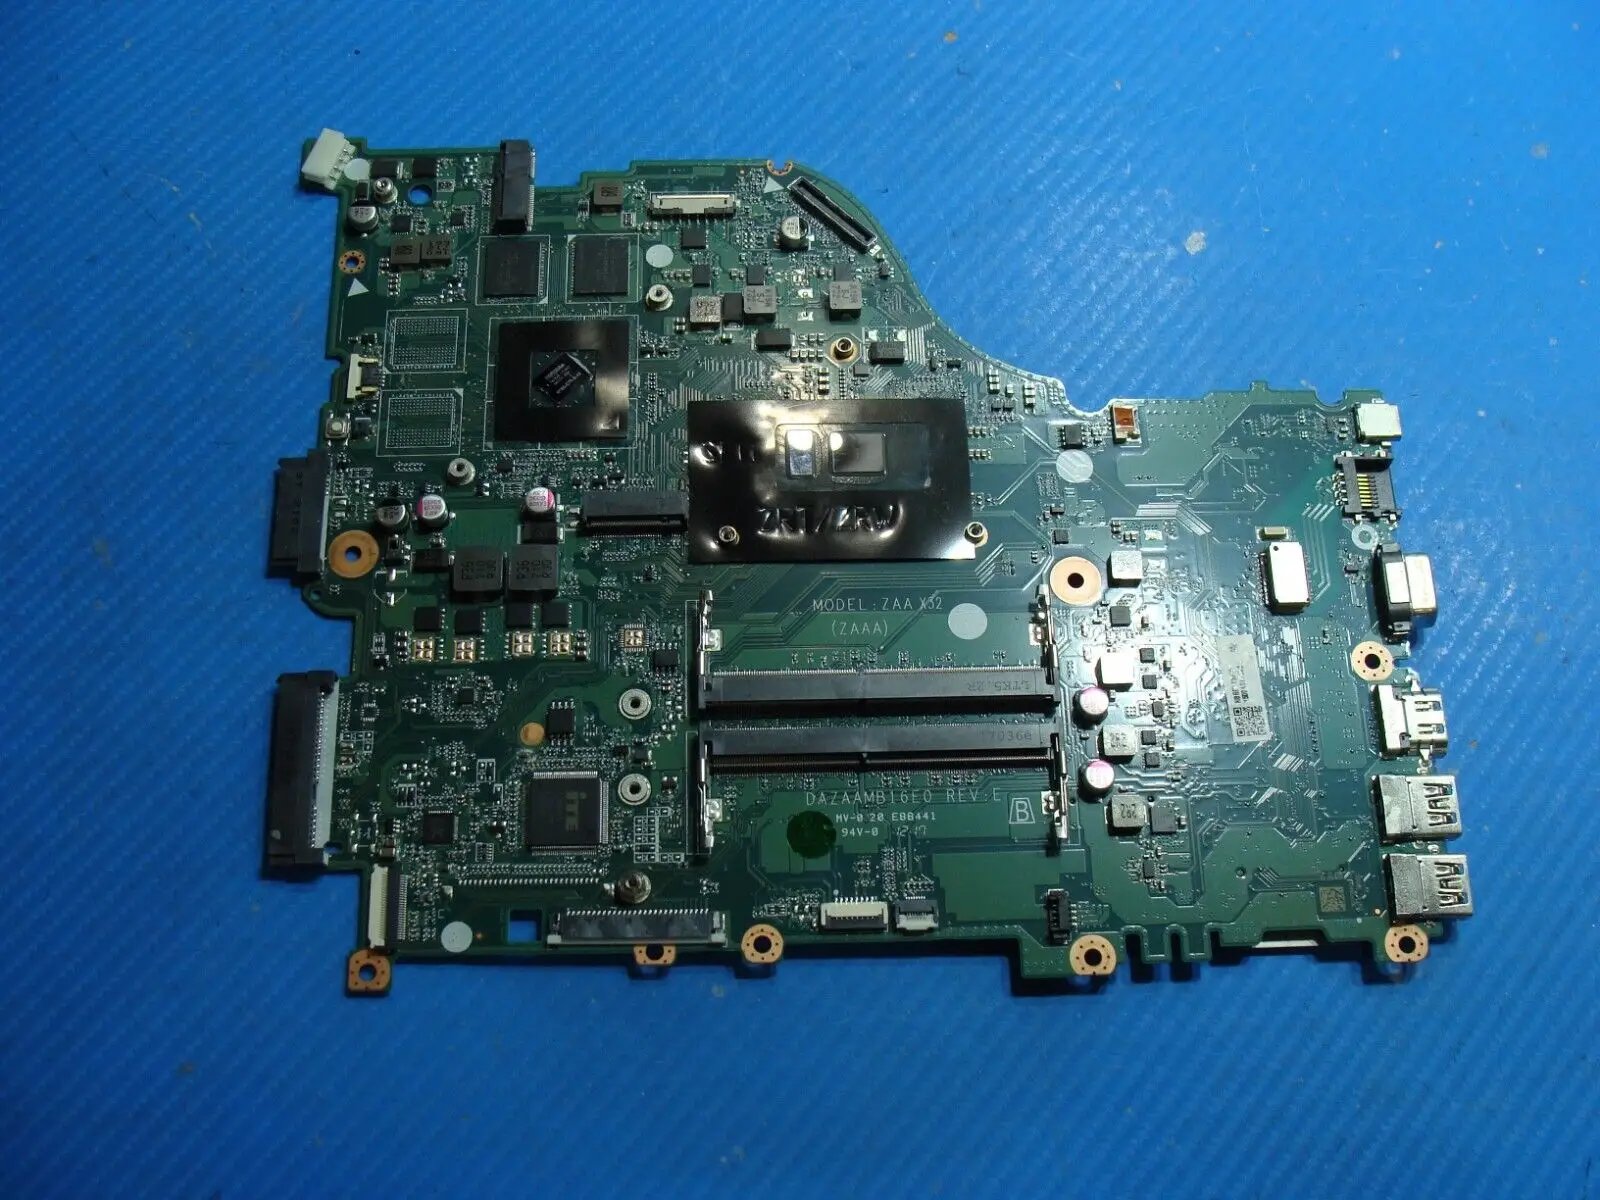 Acer Aspire F15 15.6